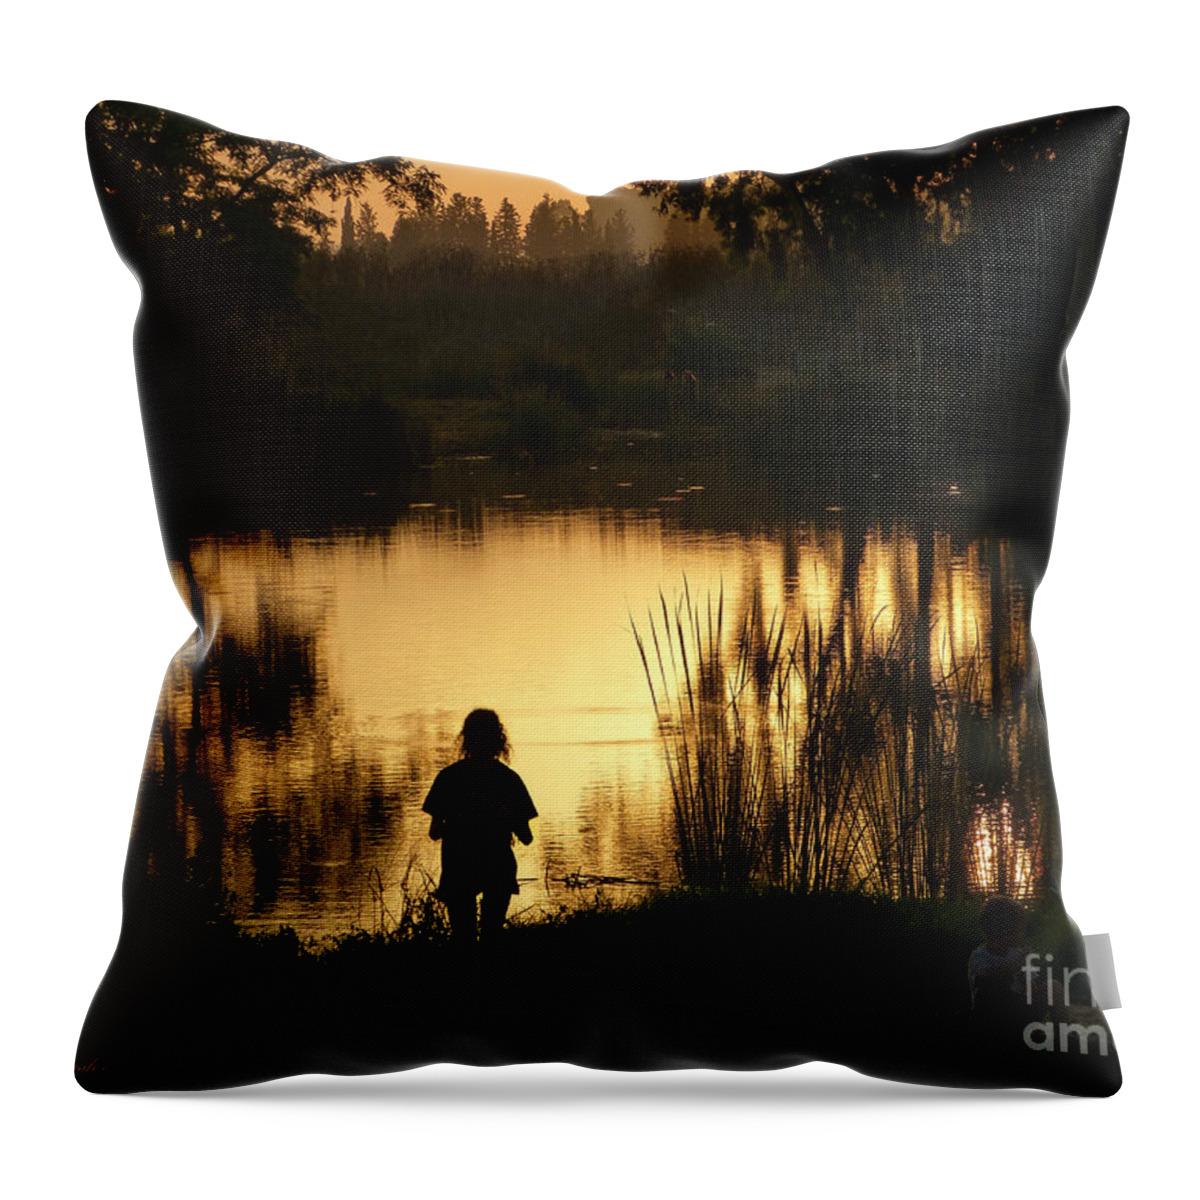 Sunset Throw Pillow featuring the photograph Sunset reflections by Arik Baltinester